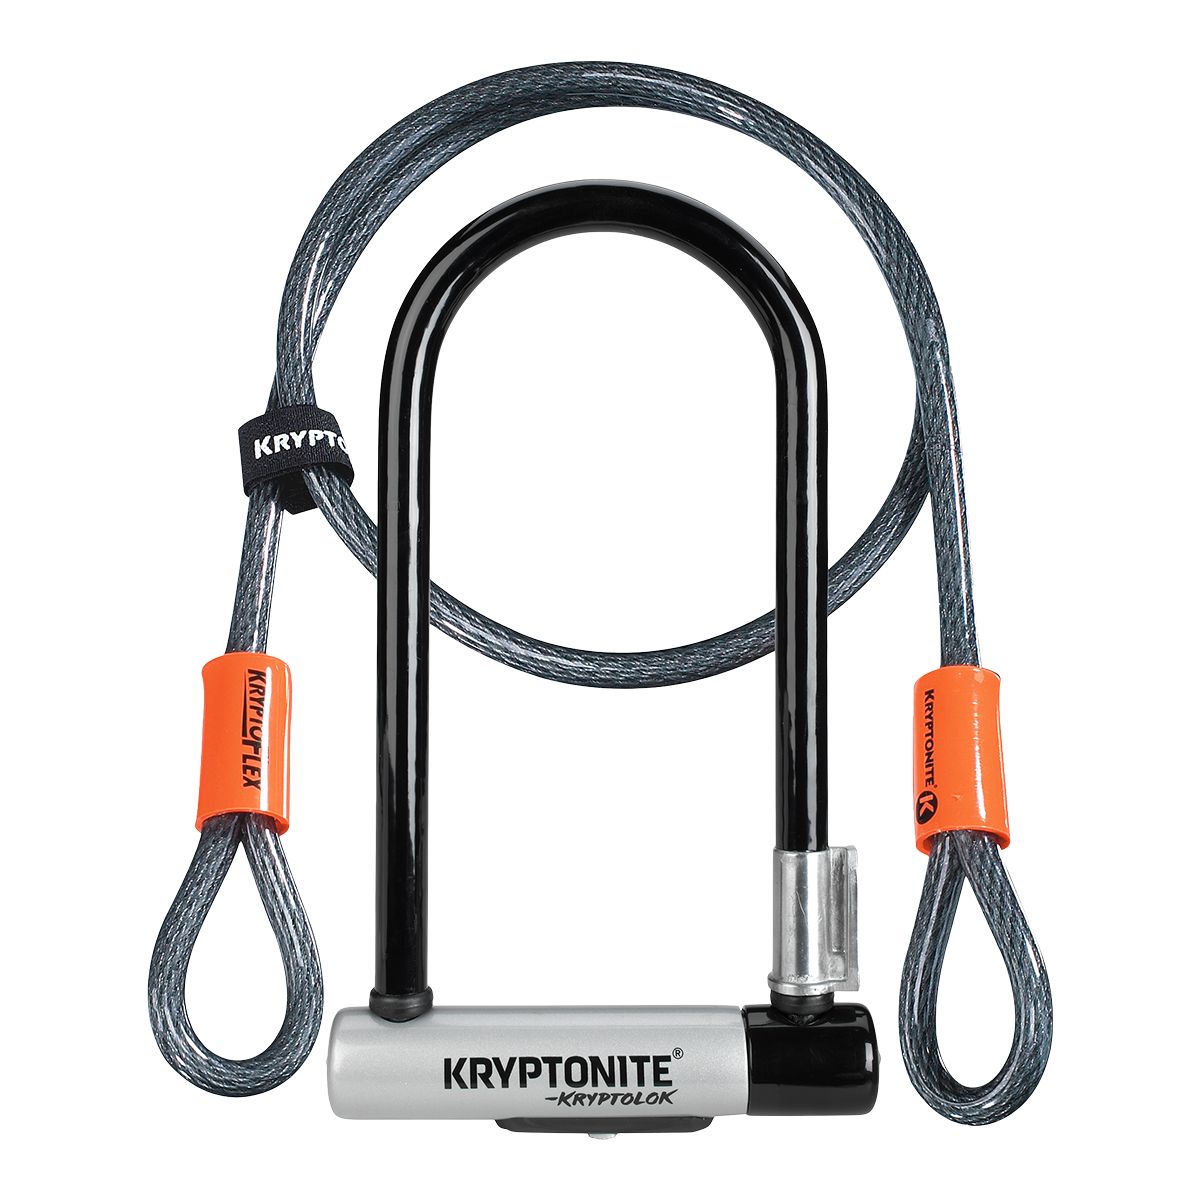 Kryptonite Keeper 12 Standard With 4 Feet Cable Lock